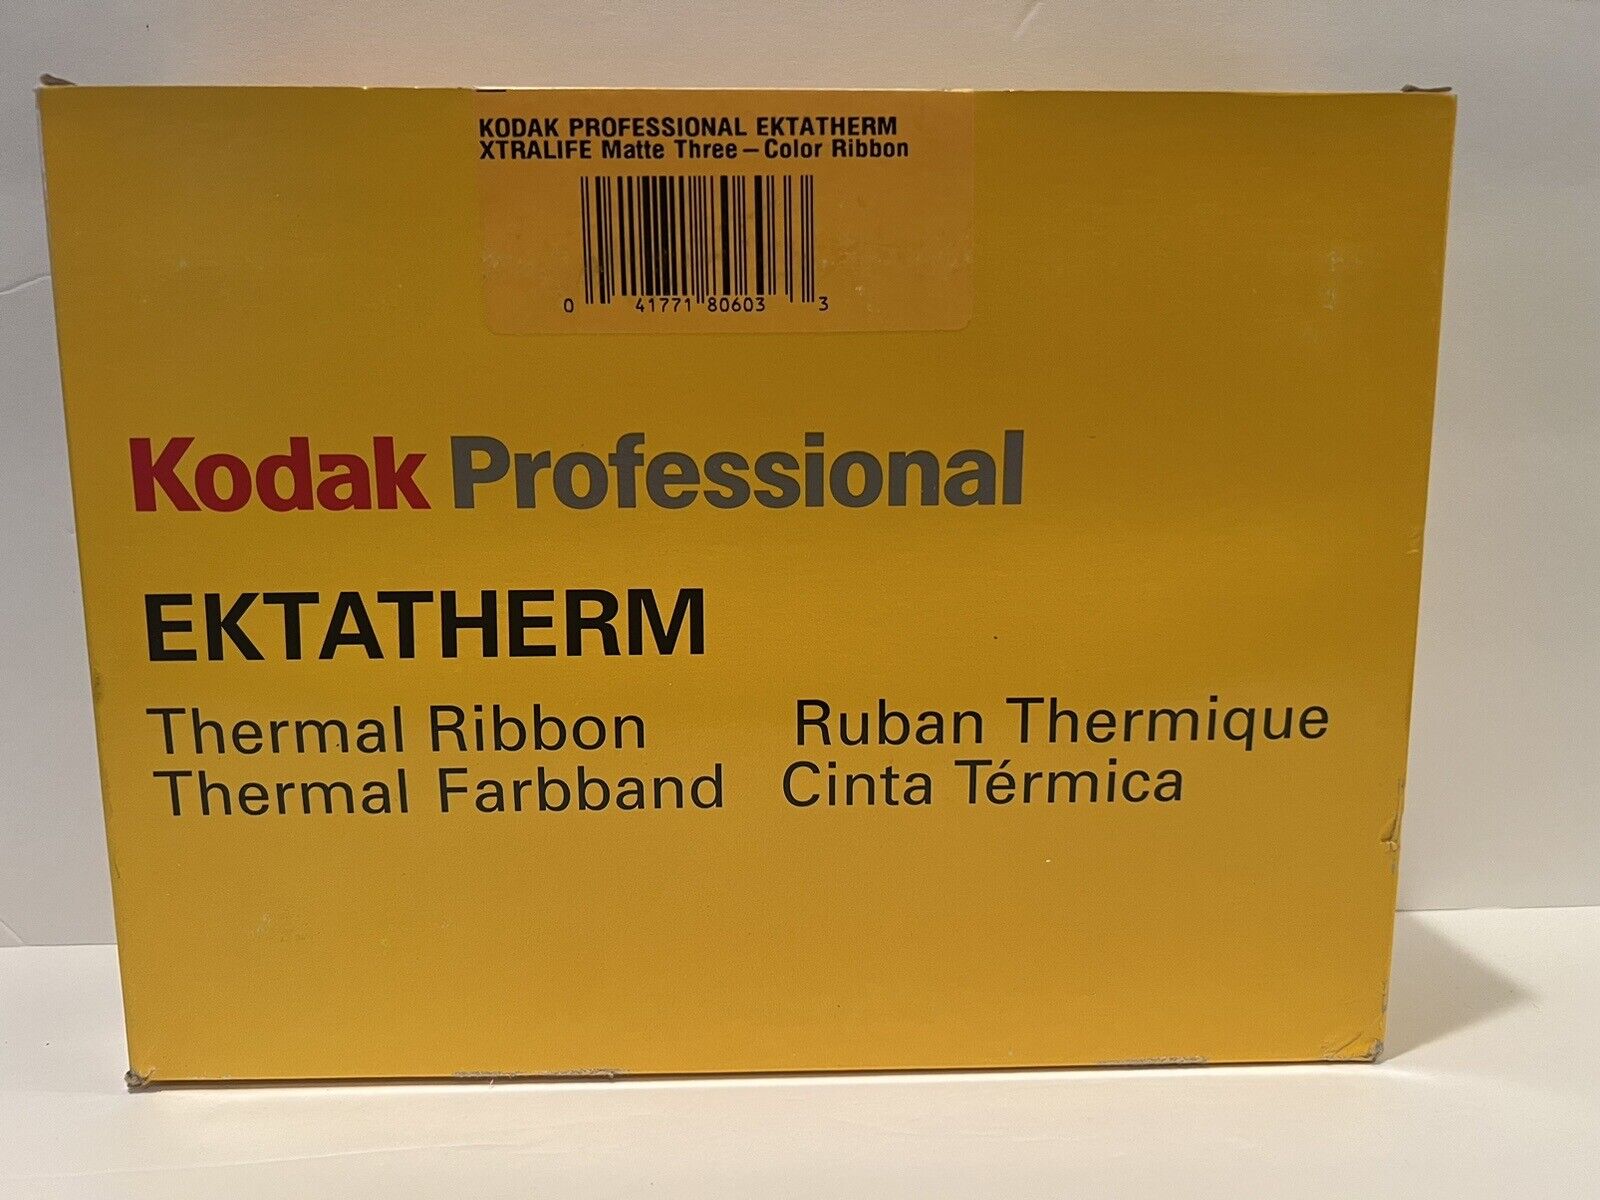 Kodak Professional Ektatherm Thermal Ribbon 1806033 Matte Three Color 150 Prints